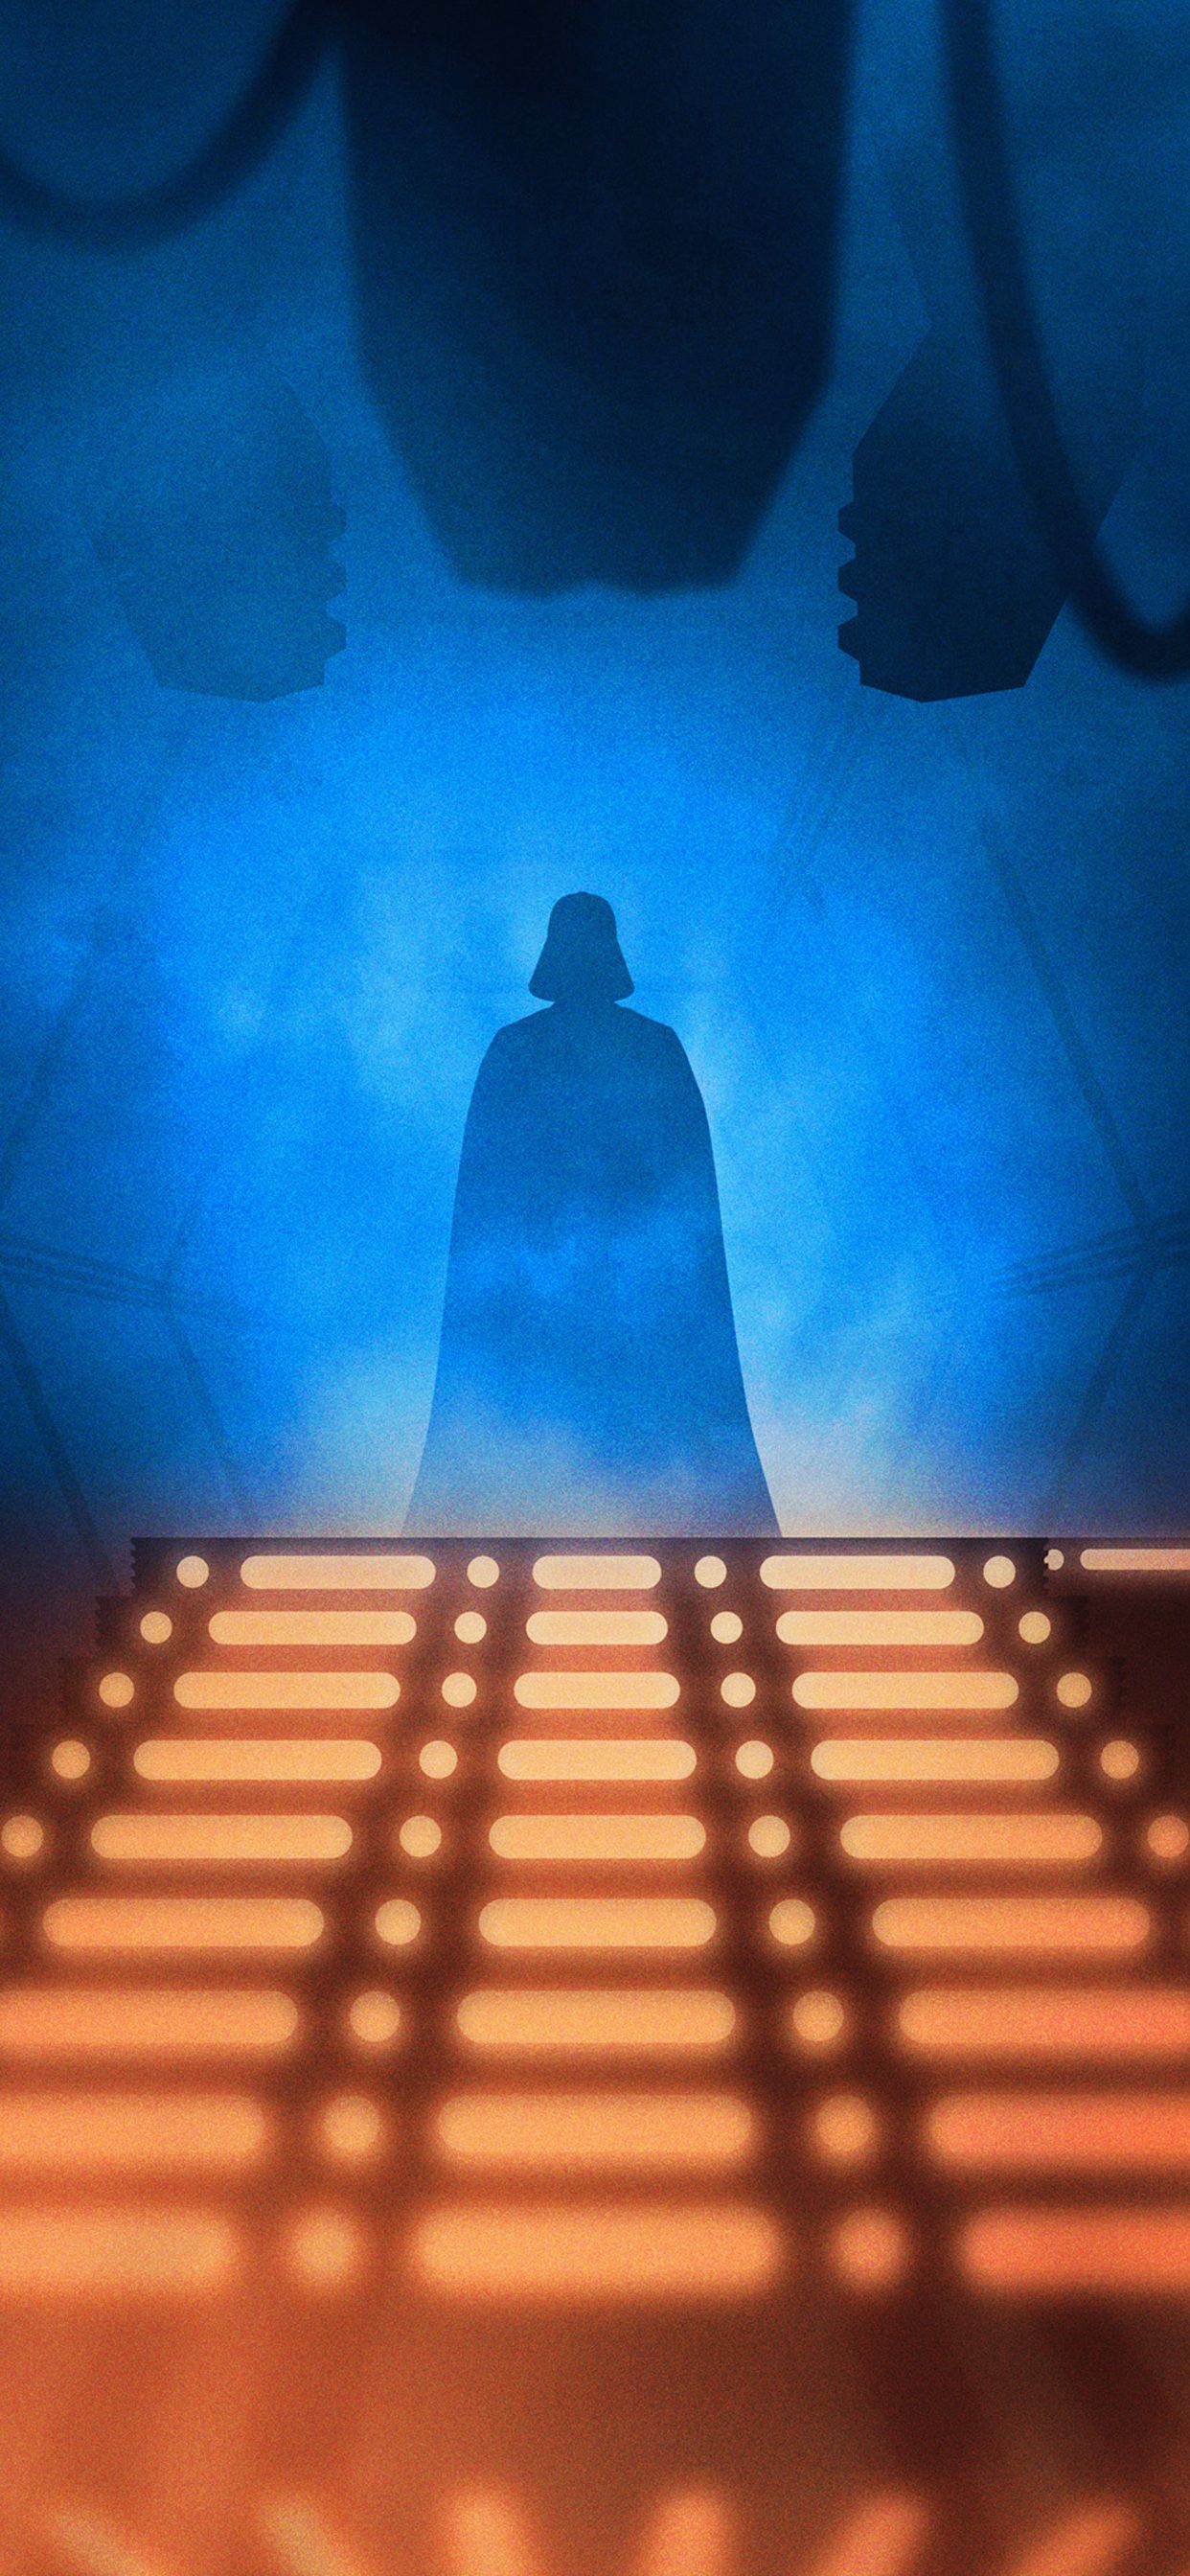 Wallpaper ID 353983  Movie Star Wars Phone Wallpaper Darth Vader  Minimalist Death Star Luke Skywalker 1080x2400 free download